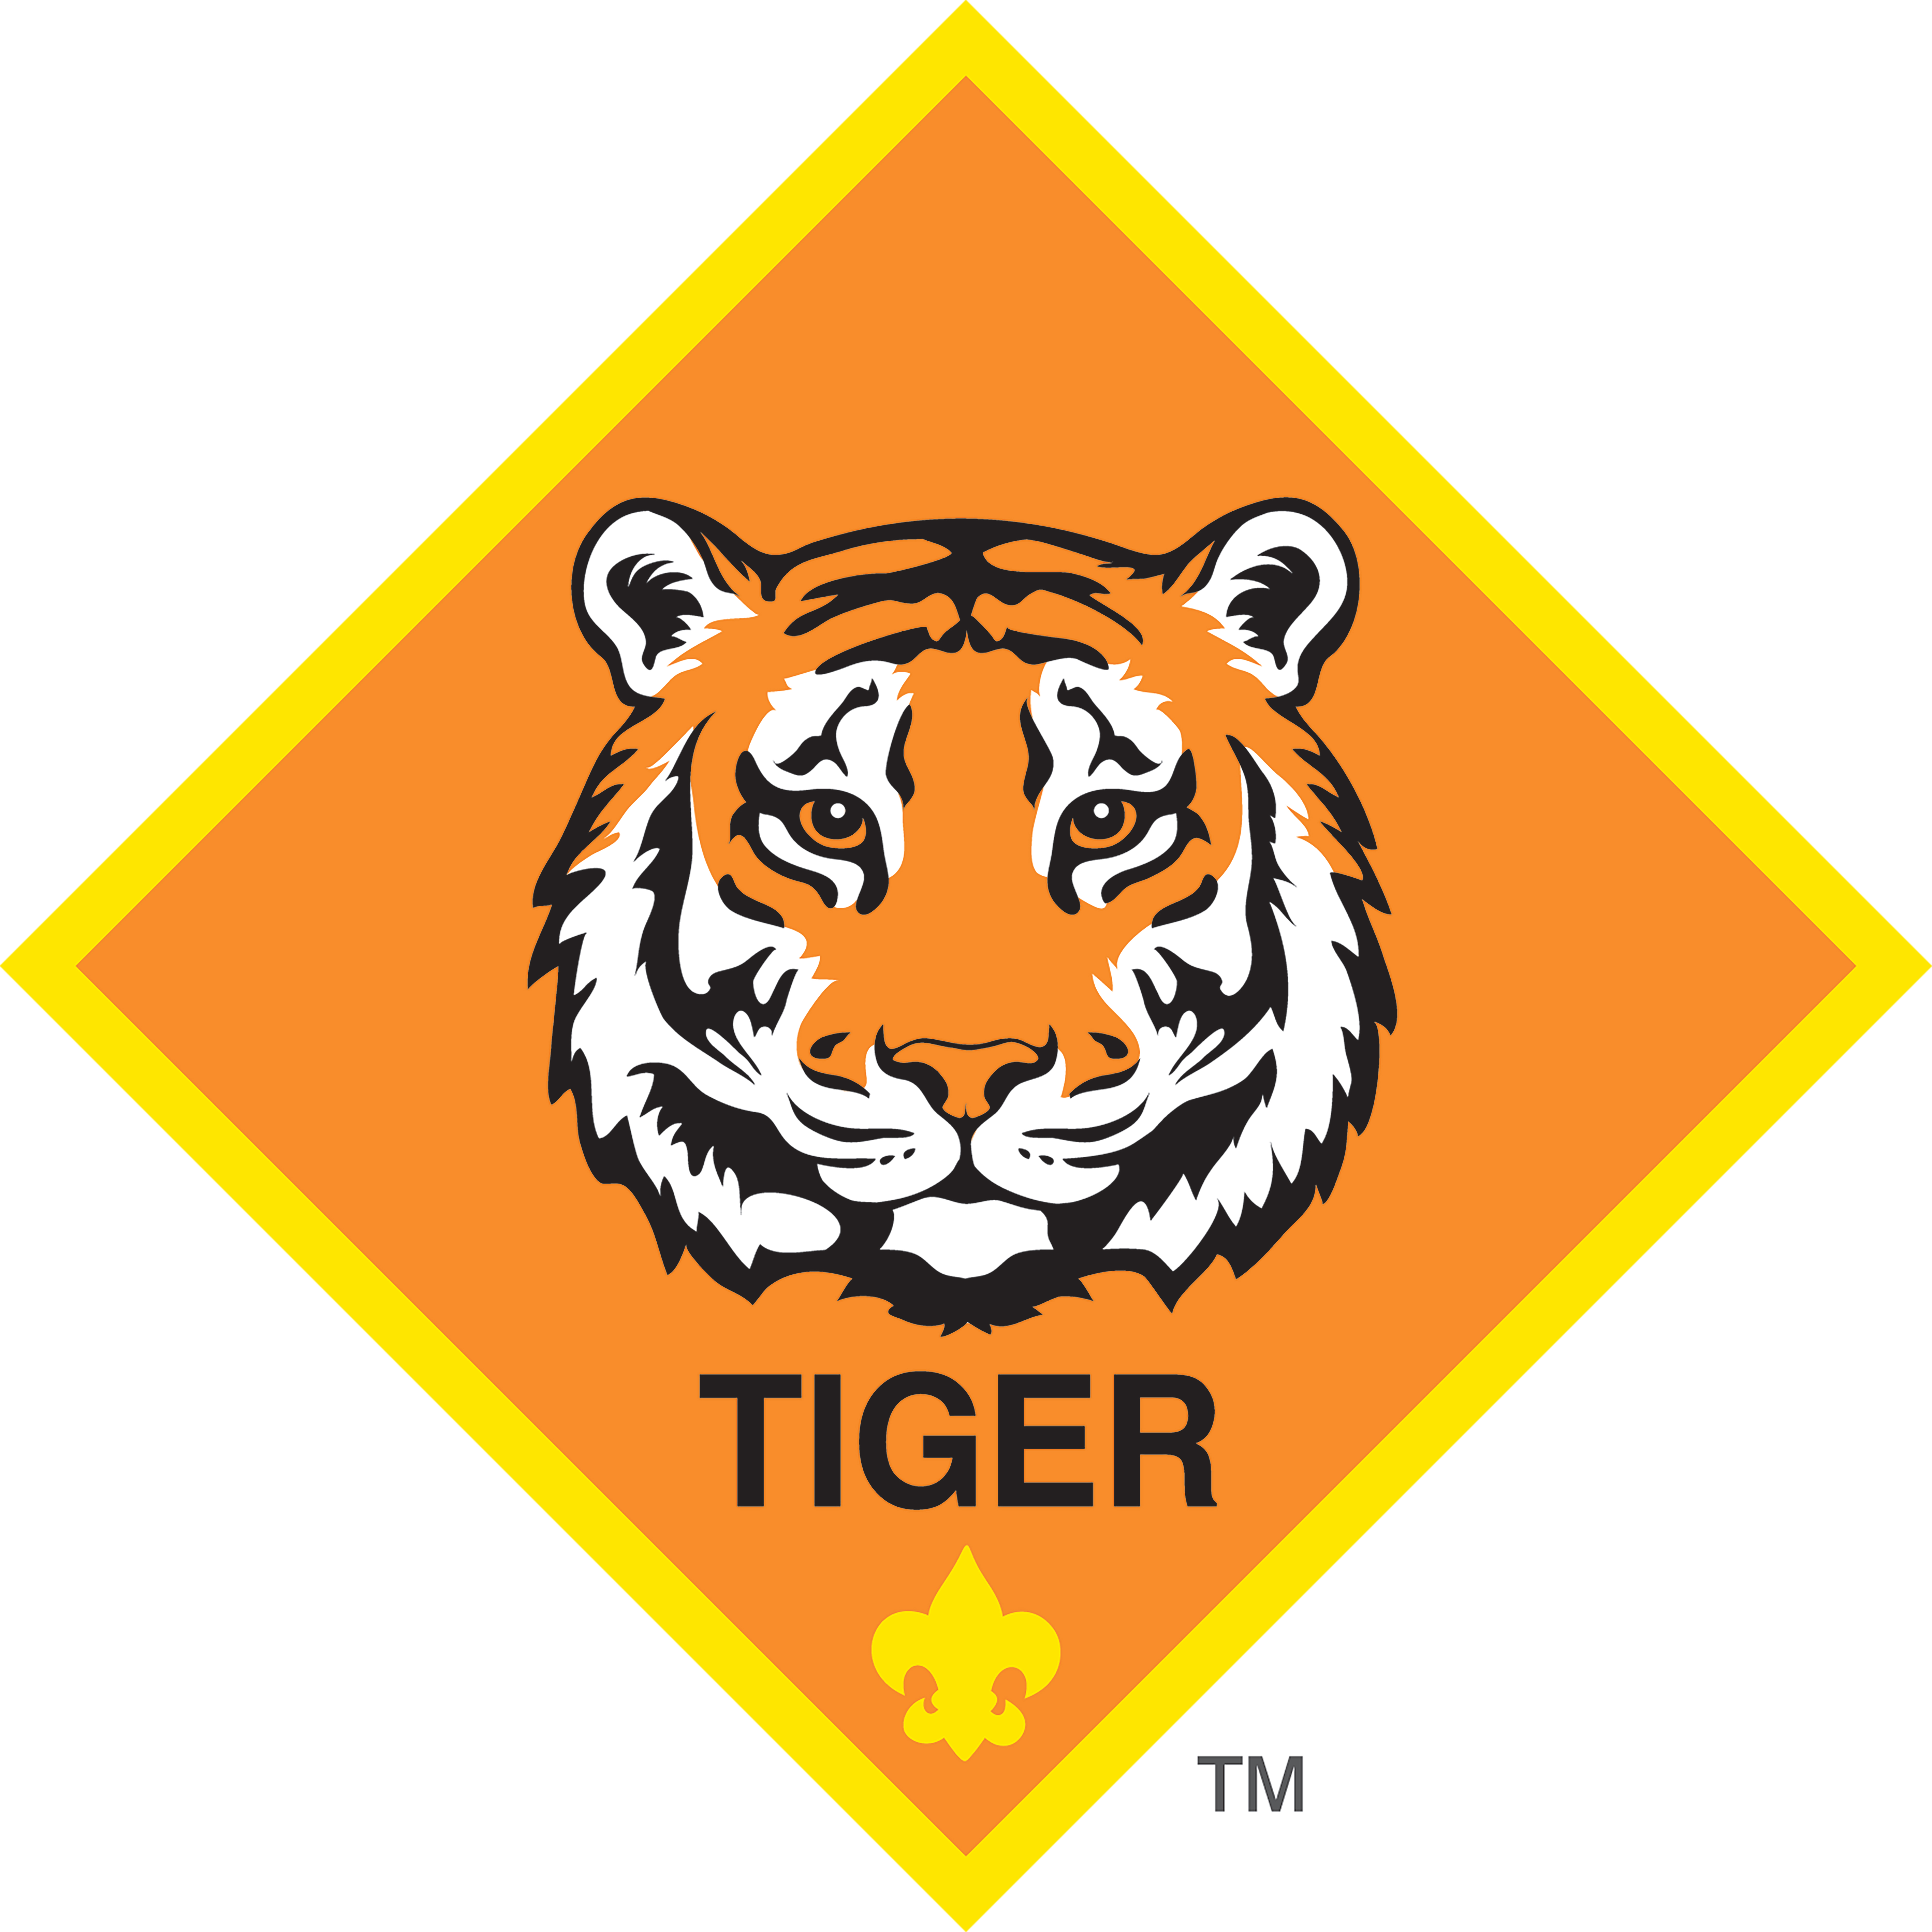 Tiger Cub Badge of Rank